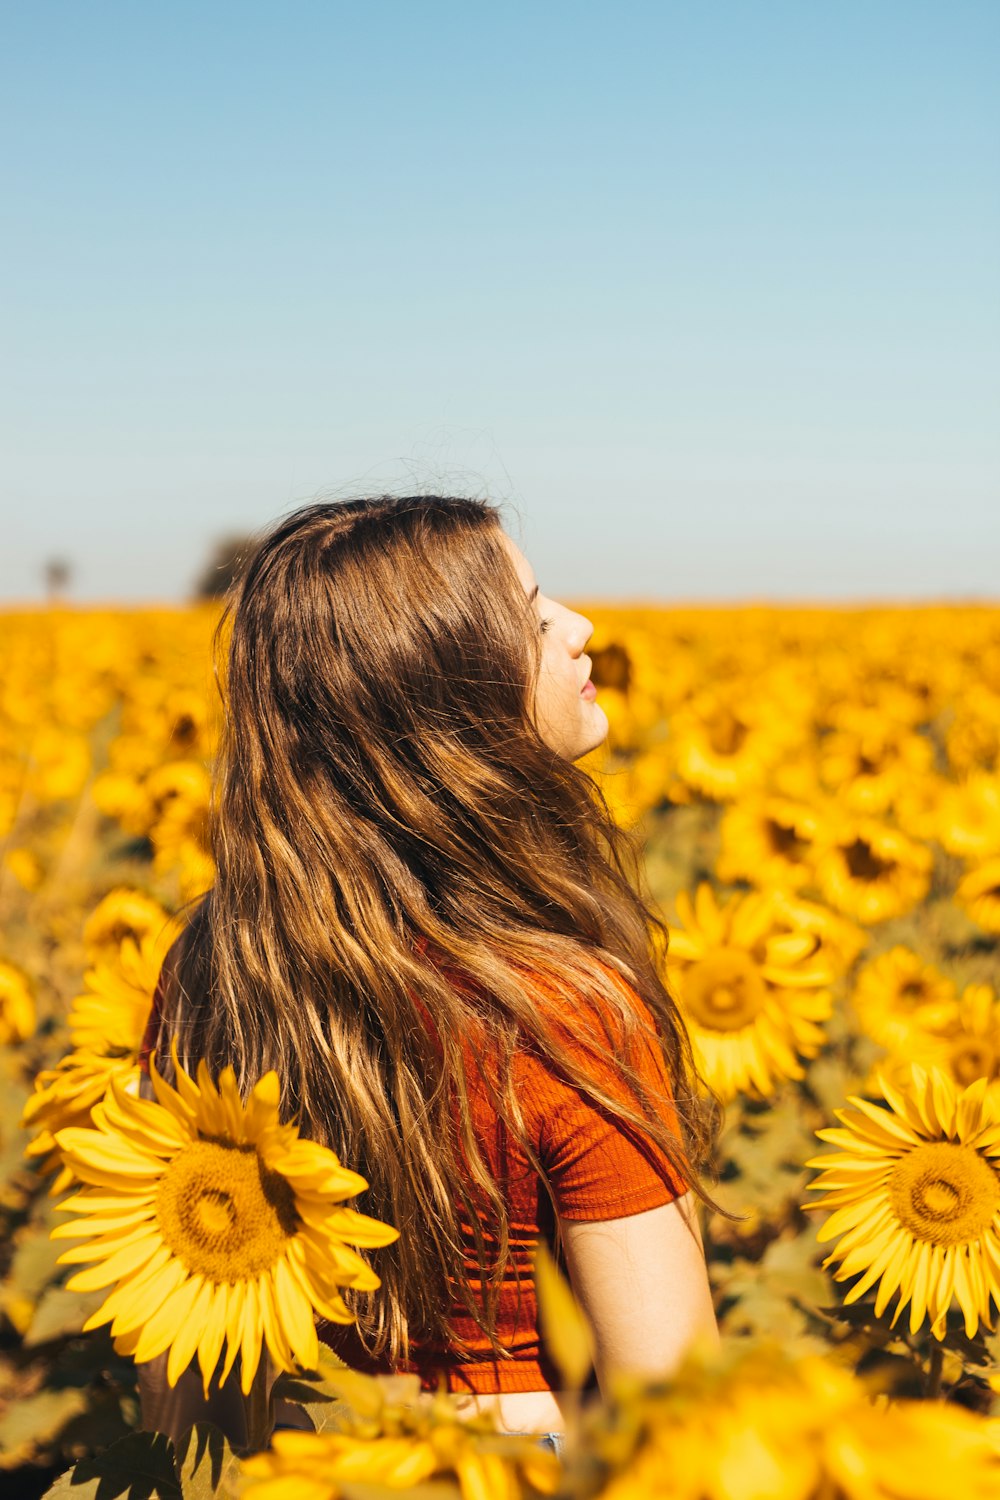 woman in orange shirt standing on sunflower field during daytime